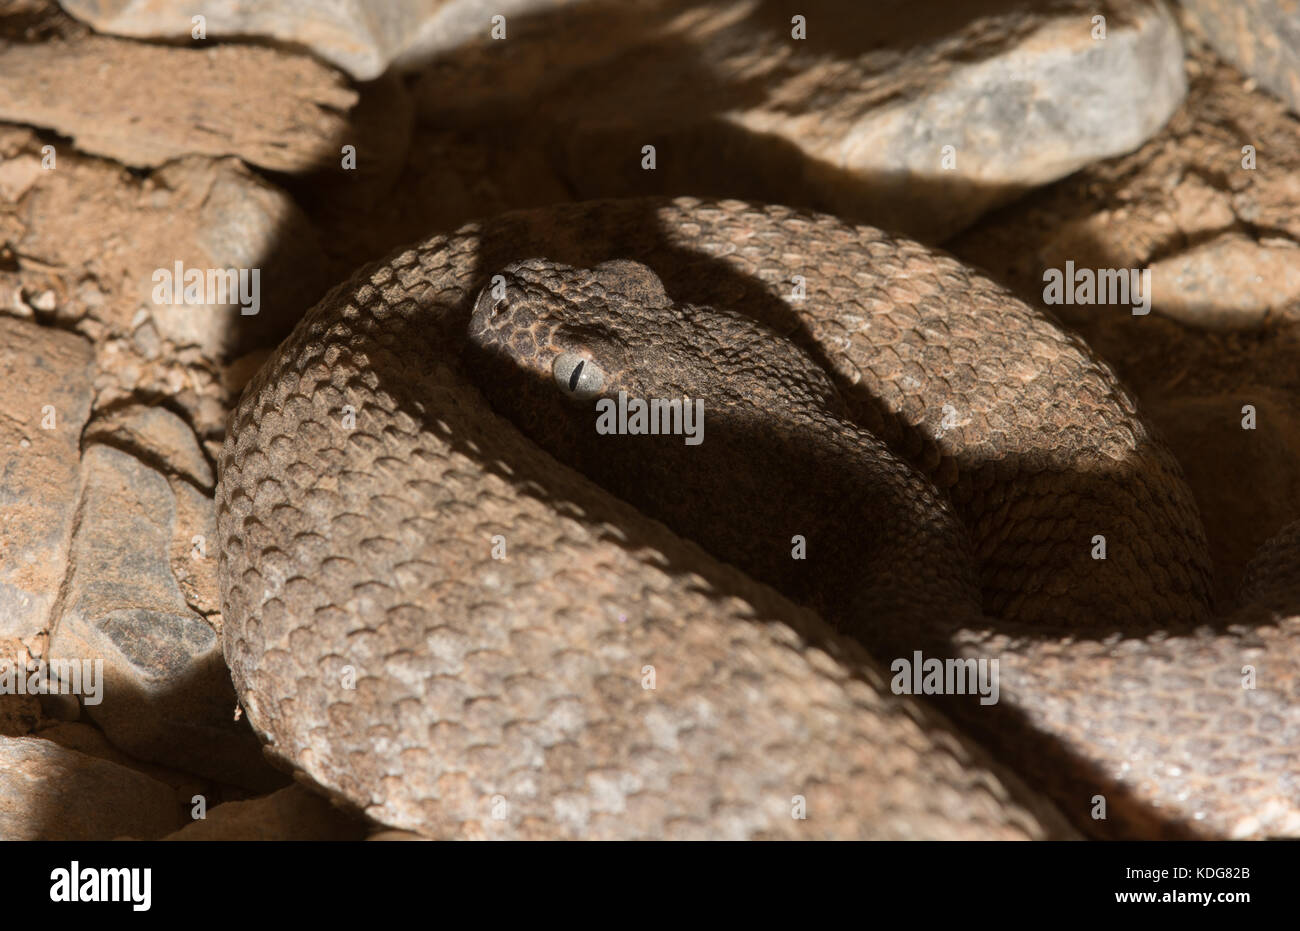 Southwestern Speckled Rattlesnake (Crotalus pyrrhus) from Maricopa County, Arizona, USA. Stock Photo